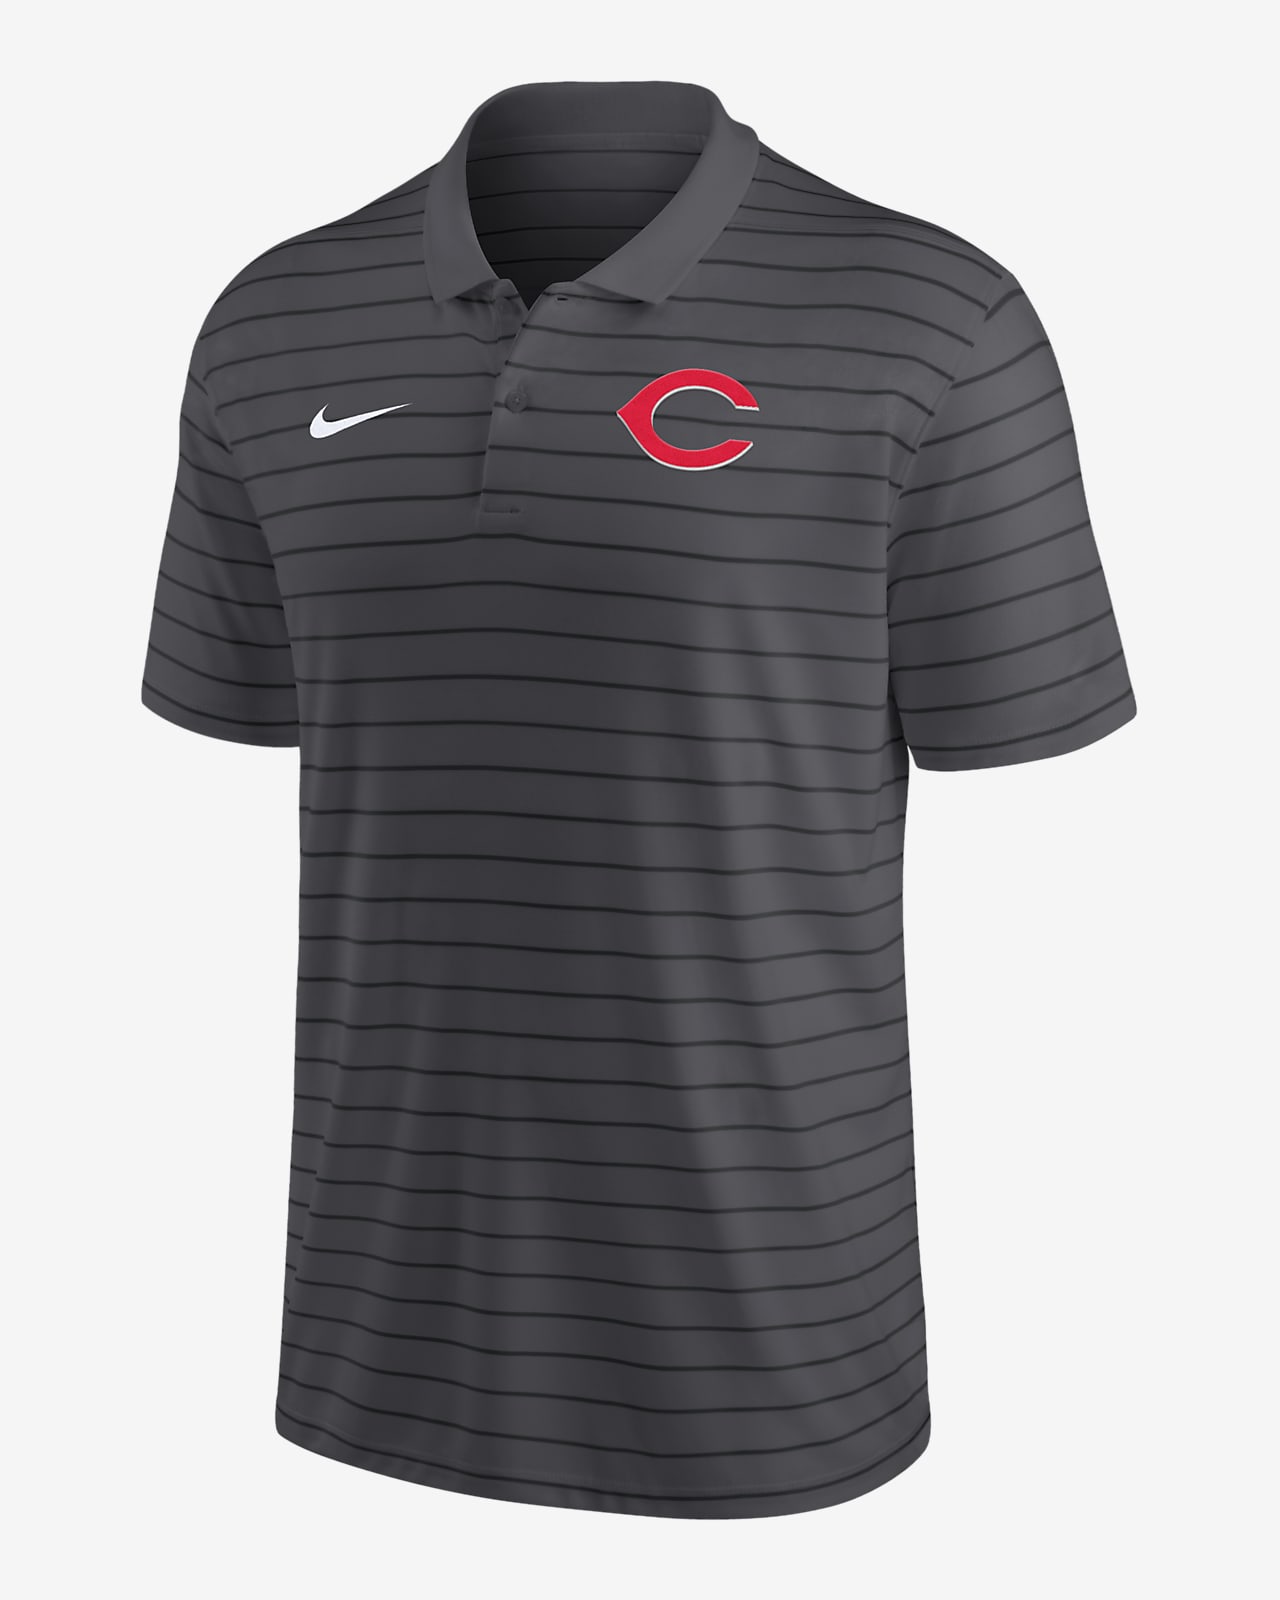 Nike Dri-FIT Early Work (MLB Cincinnati Reds) Men's T-Shirt. Nike